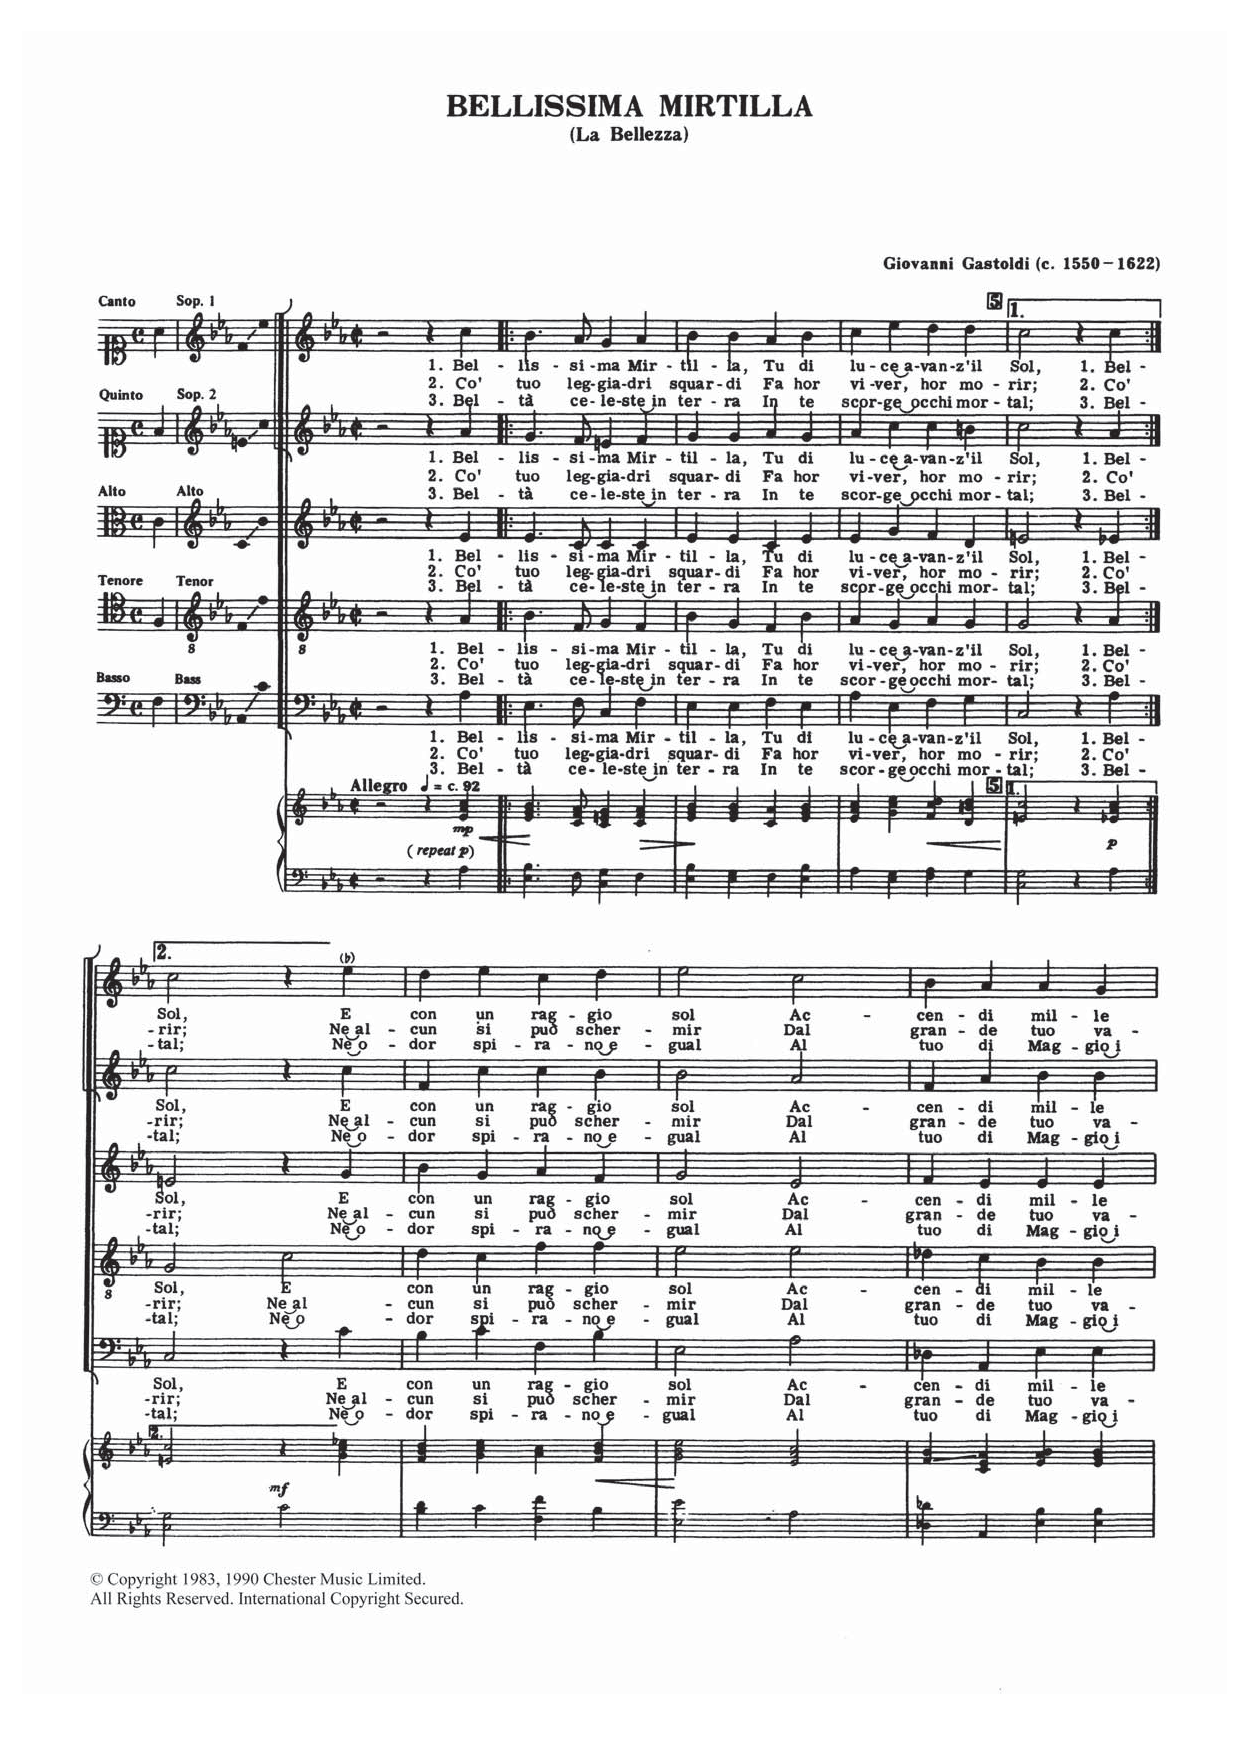 Giovanni Giacomo Gastoldi Bellissima Mirtilla Sheet Music Notes & Chords for Choir - Download or Print PDF